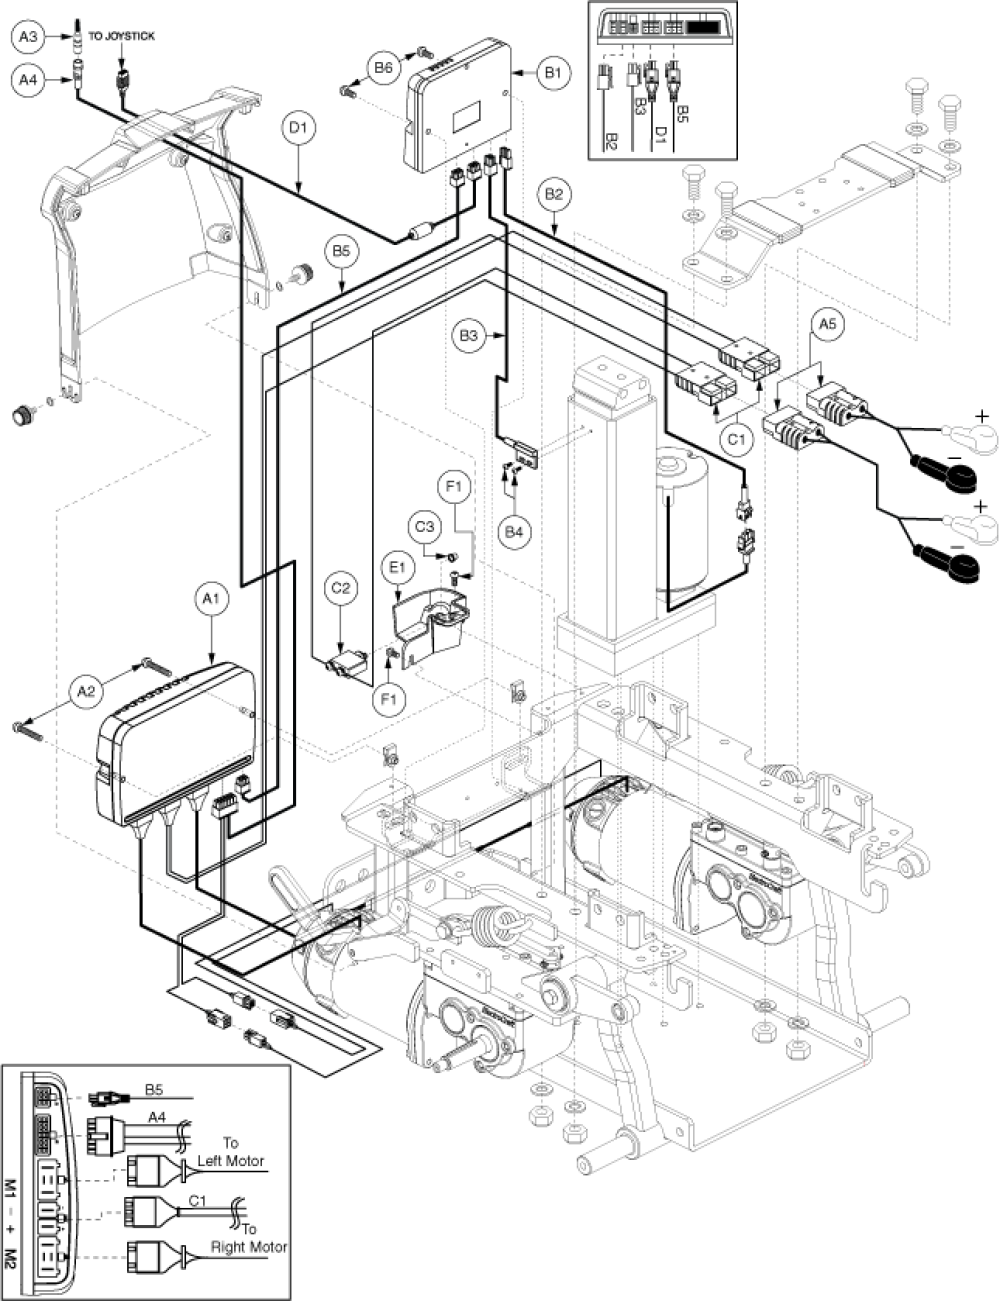 Q-logic, Accu-trac, Power Seat Thru Joystick parts diagram